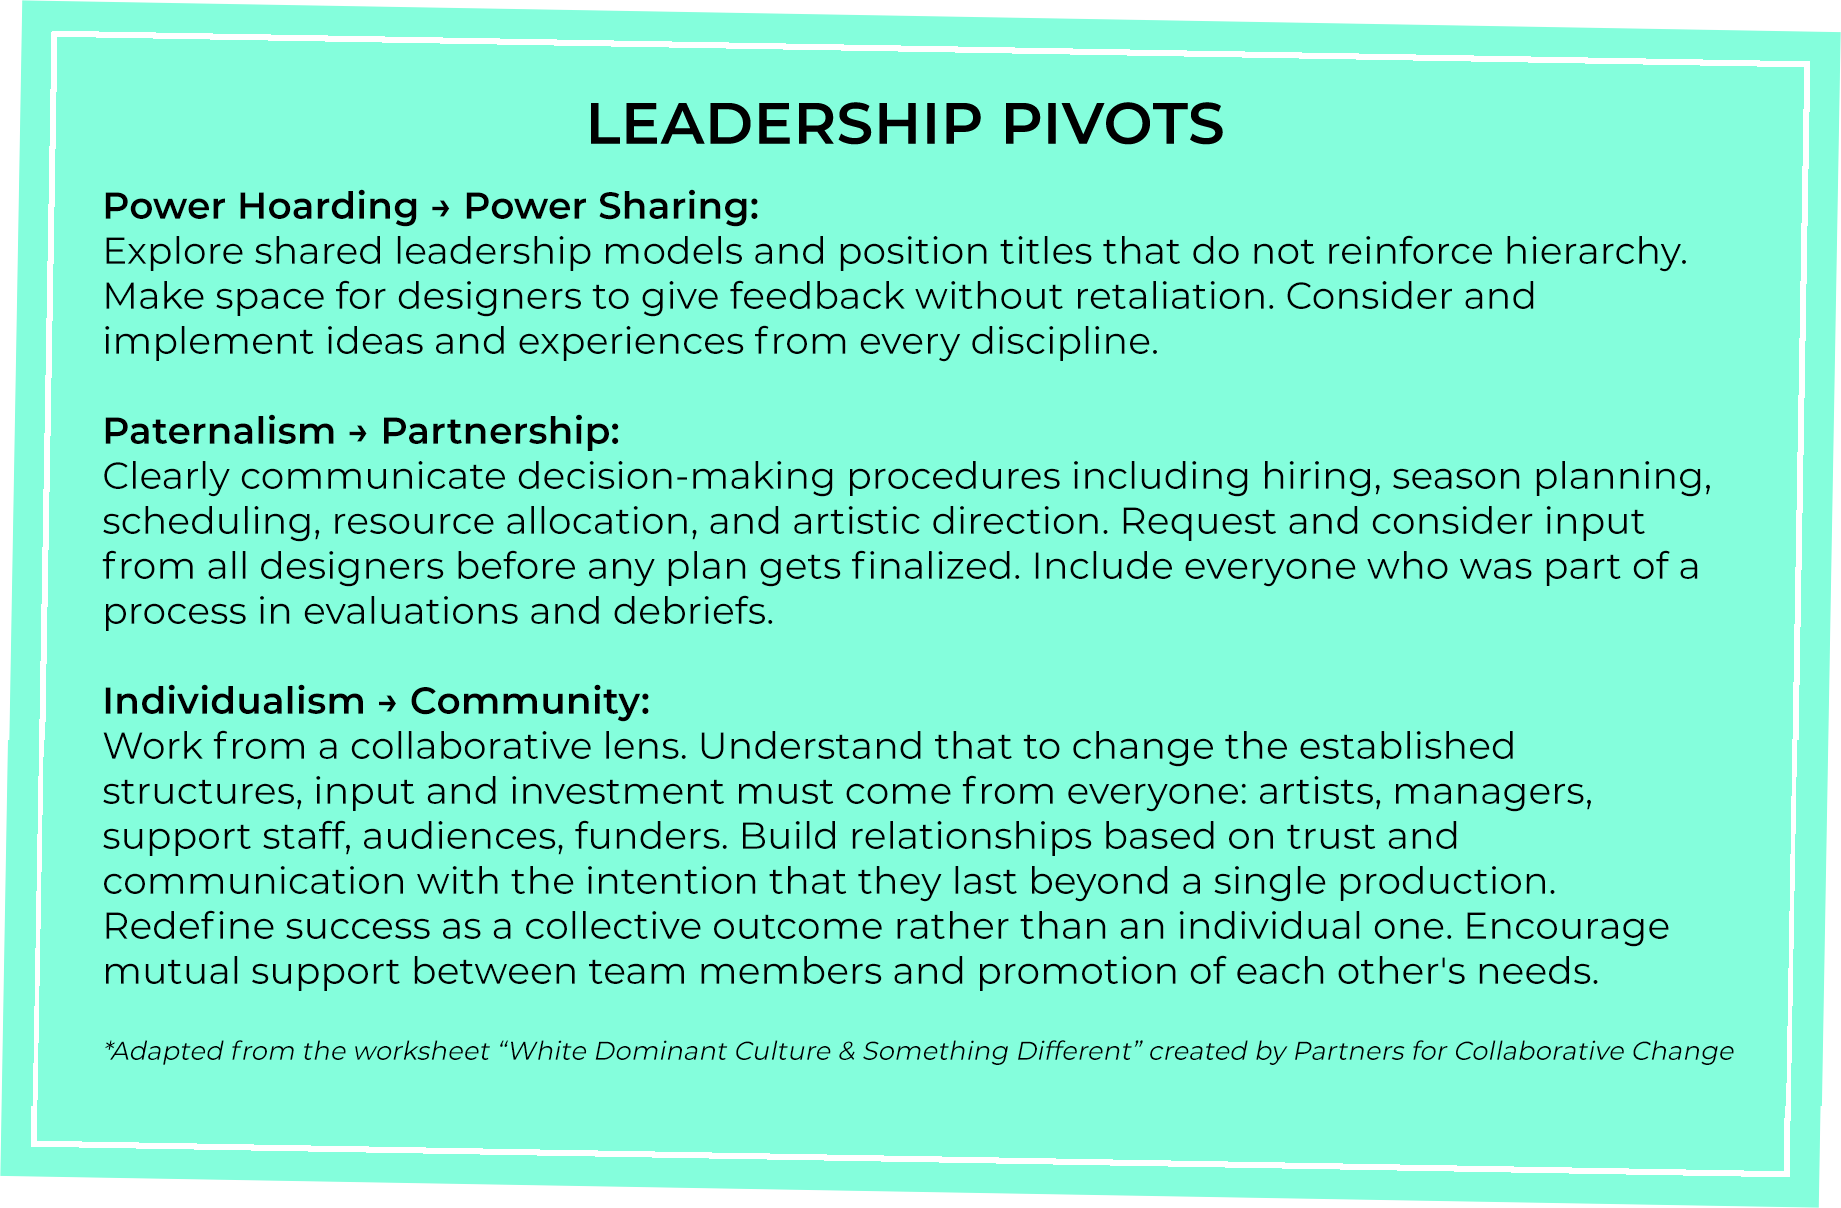 Leadership Pivots  
Power Hoarding> Power Sharing
Paternalism > Partnership
Individualism > Community 
